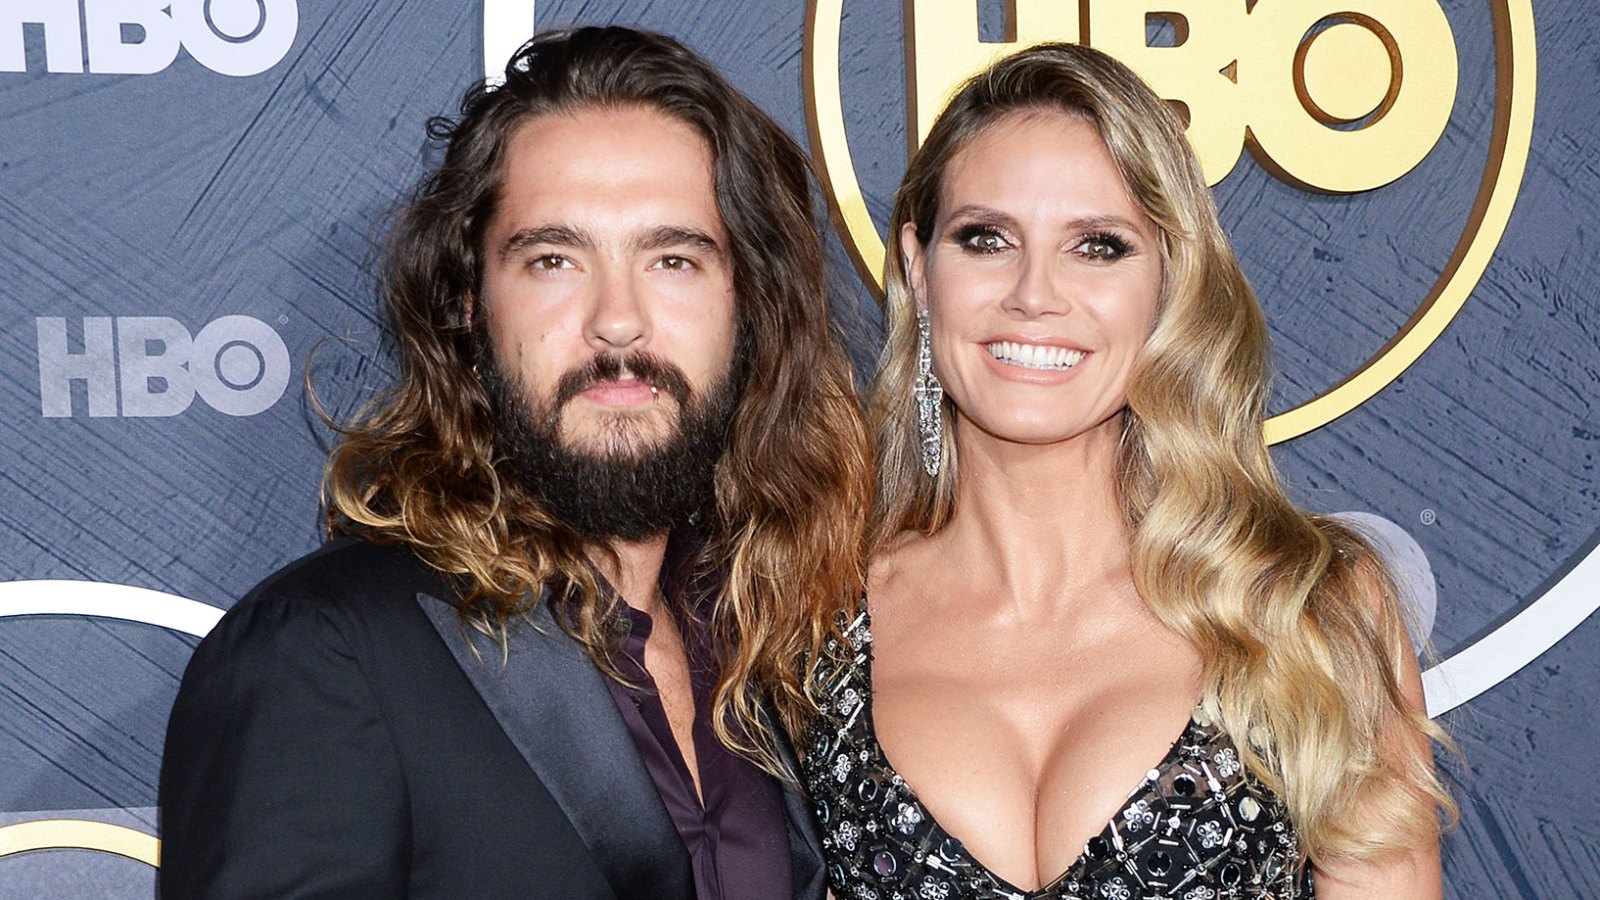 Heidi Klum Admits She Didn’t Listen to Husband Tom Kaulitzs Music Before Dating